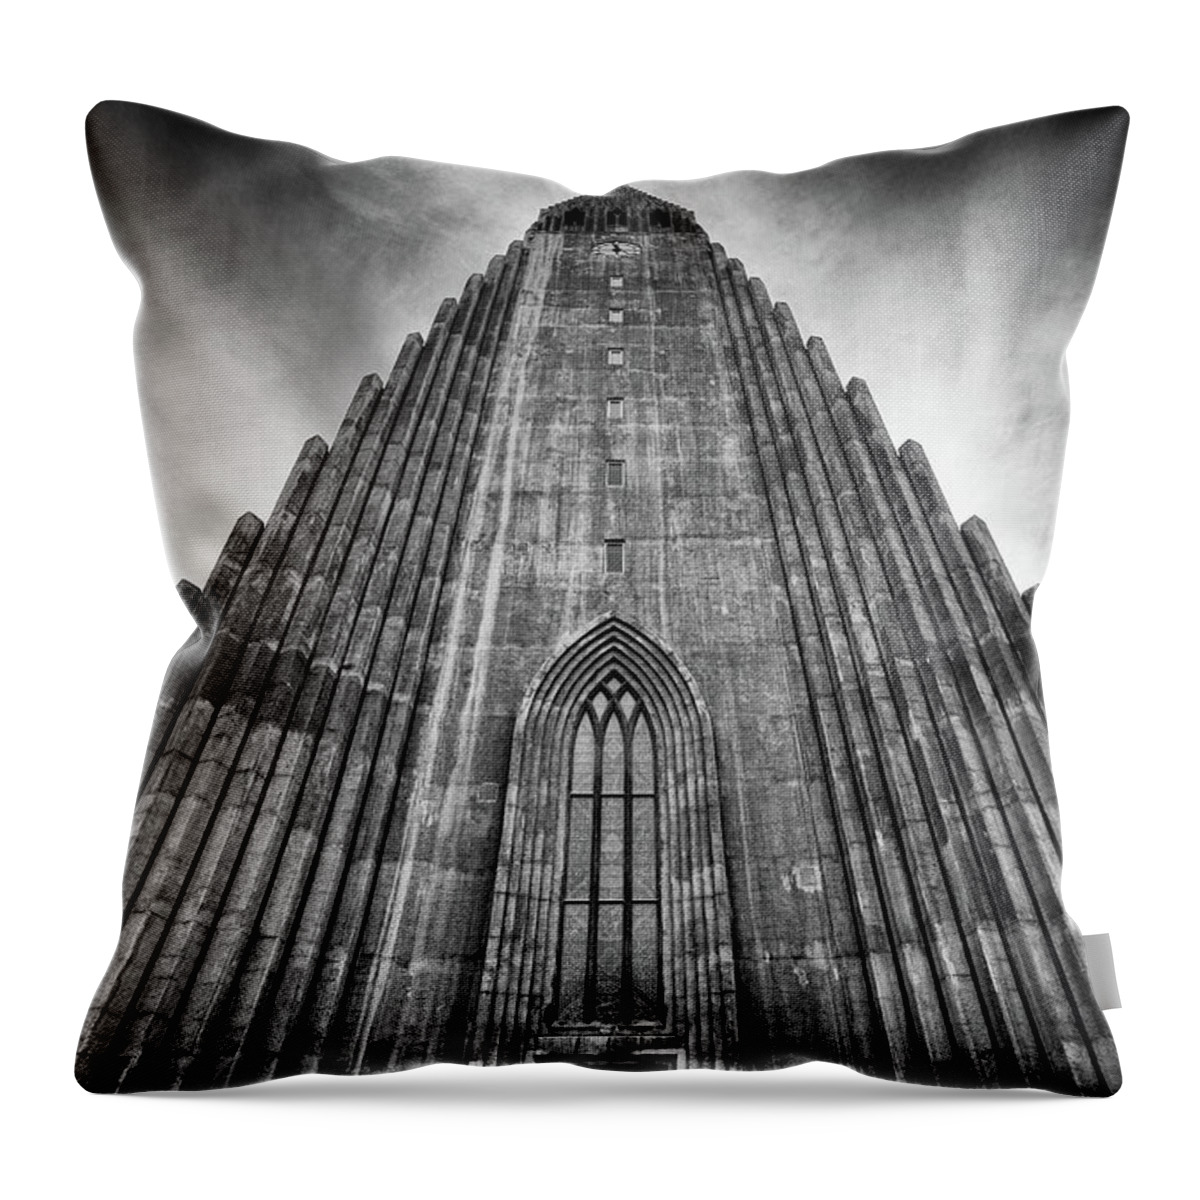 Hallgrimskirkja Throw Pillow featuring the photograph Hallgrimskirkja Church 2 by Nigel R Bell